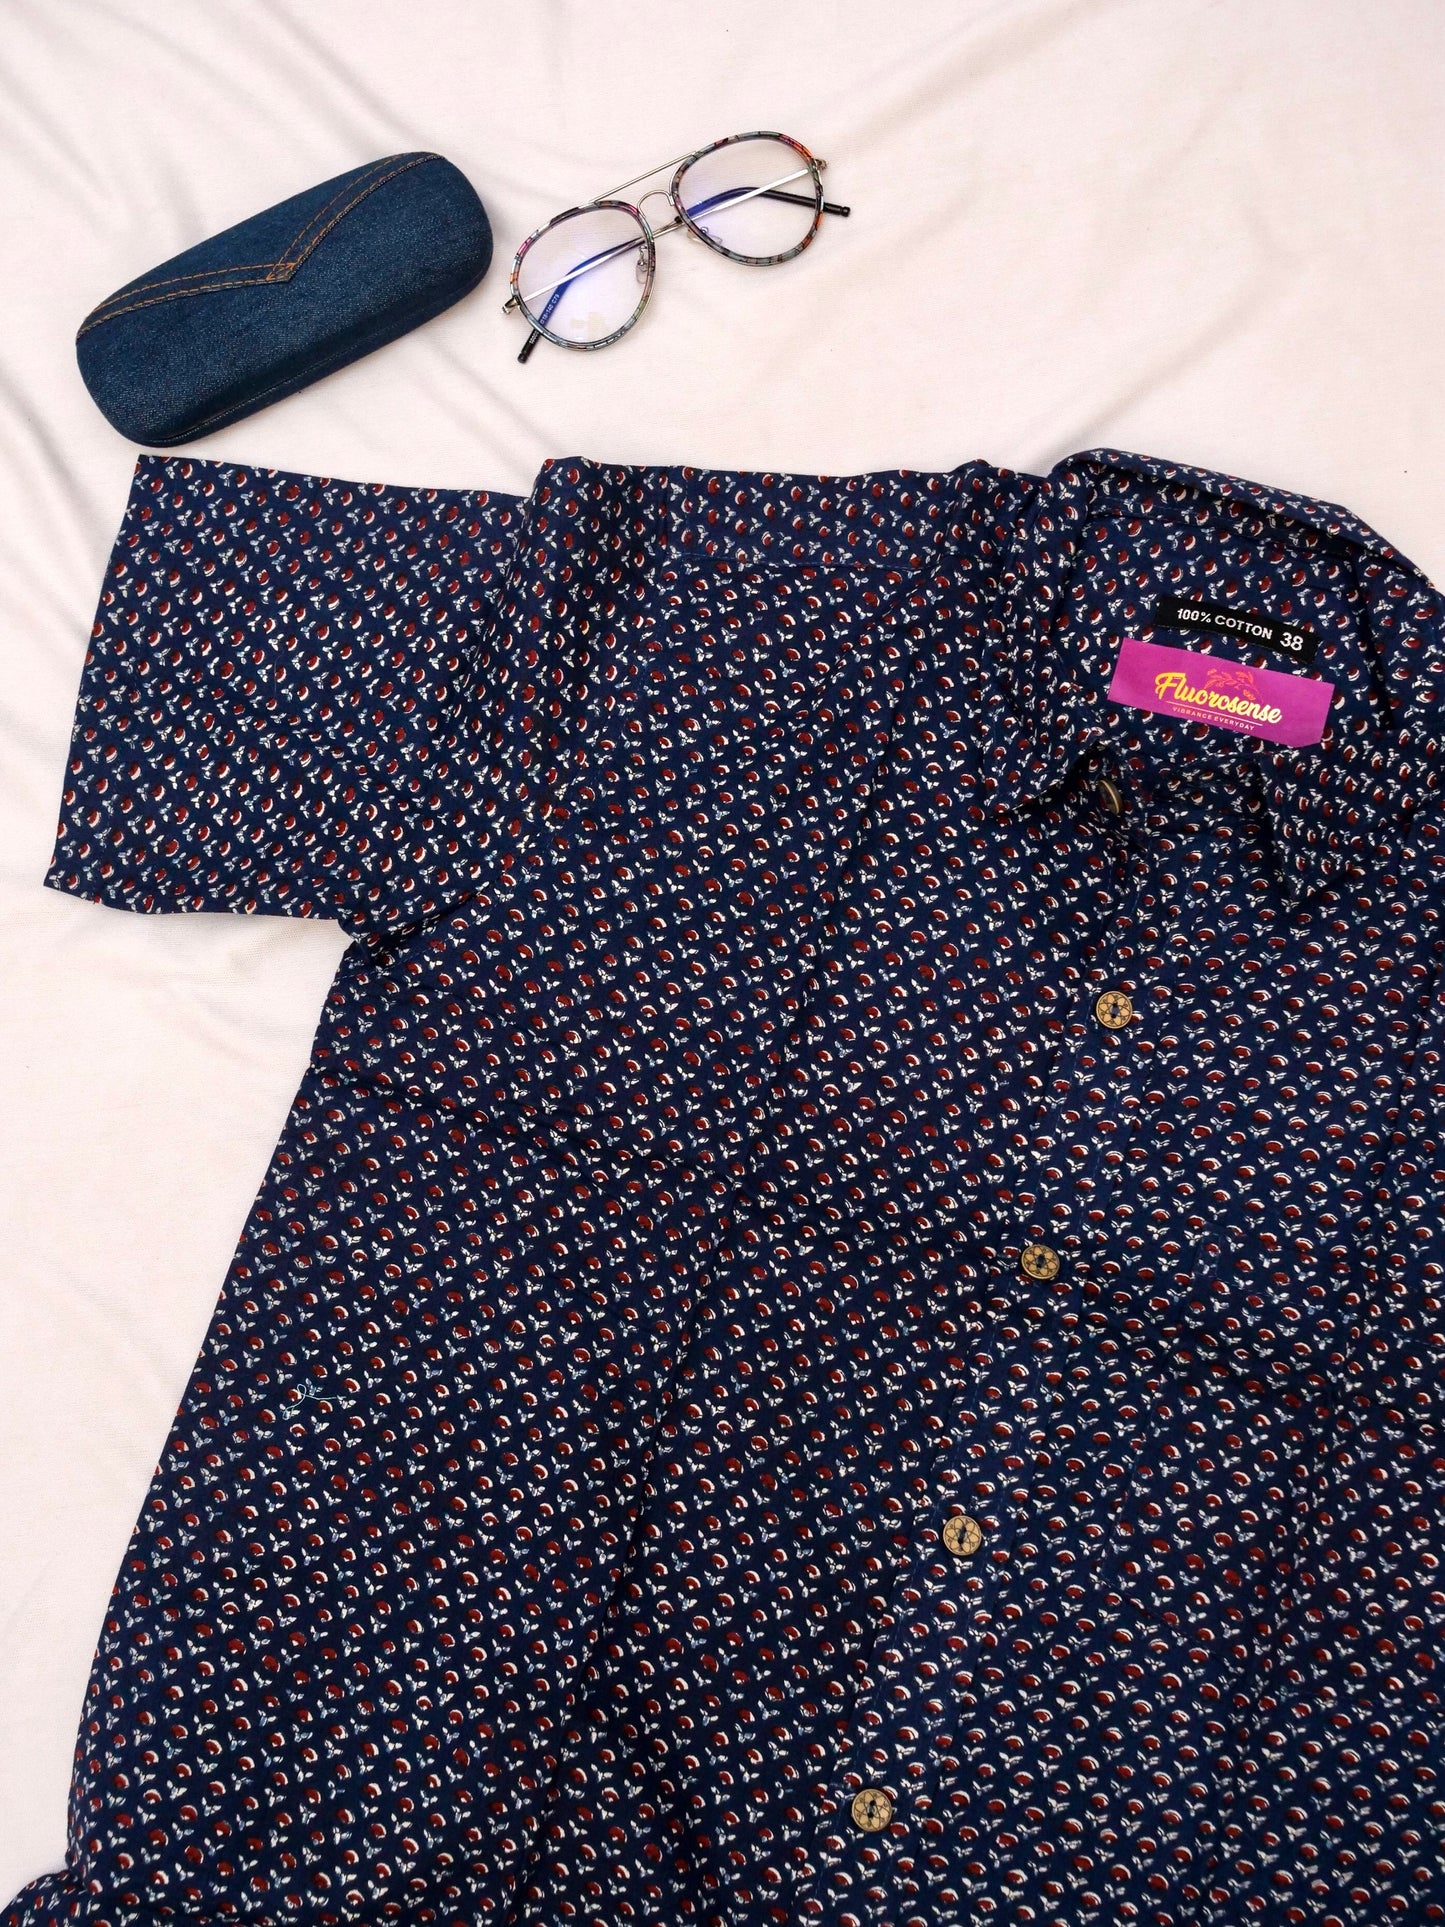 Men's Casual Shirt | 100% Cotton | Half-Sleeves | Motifs Print | Blue & Maroon